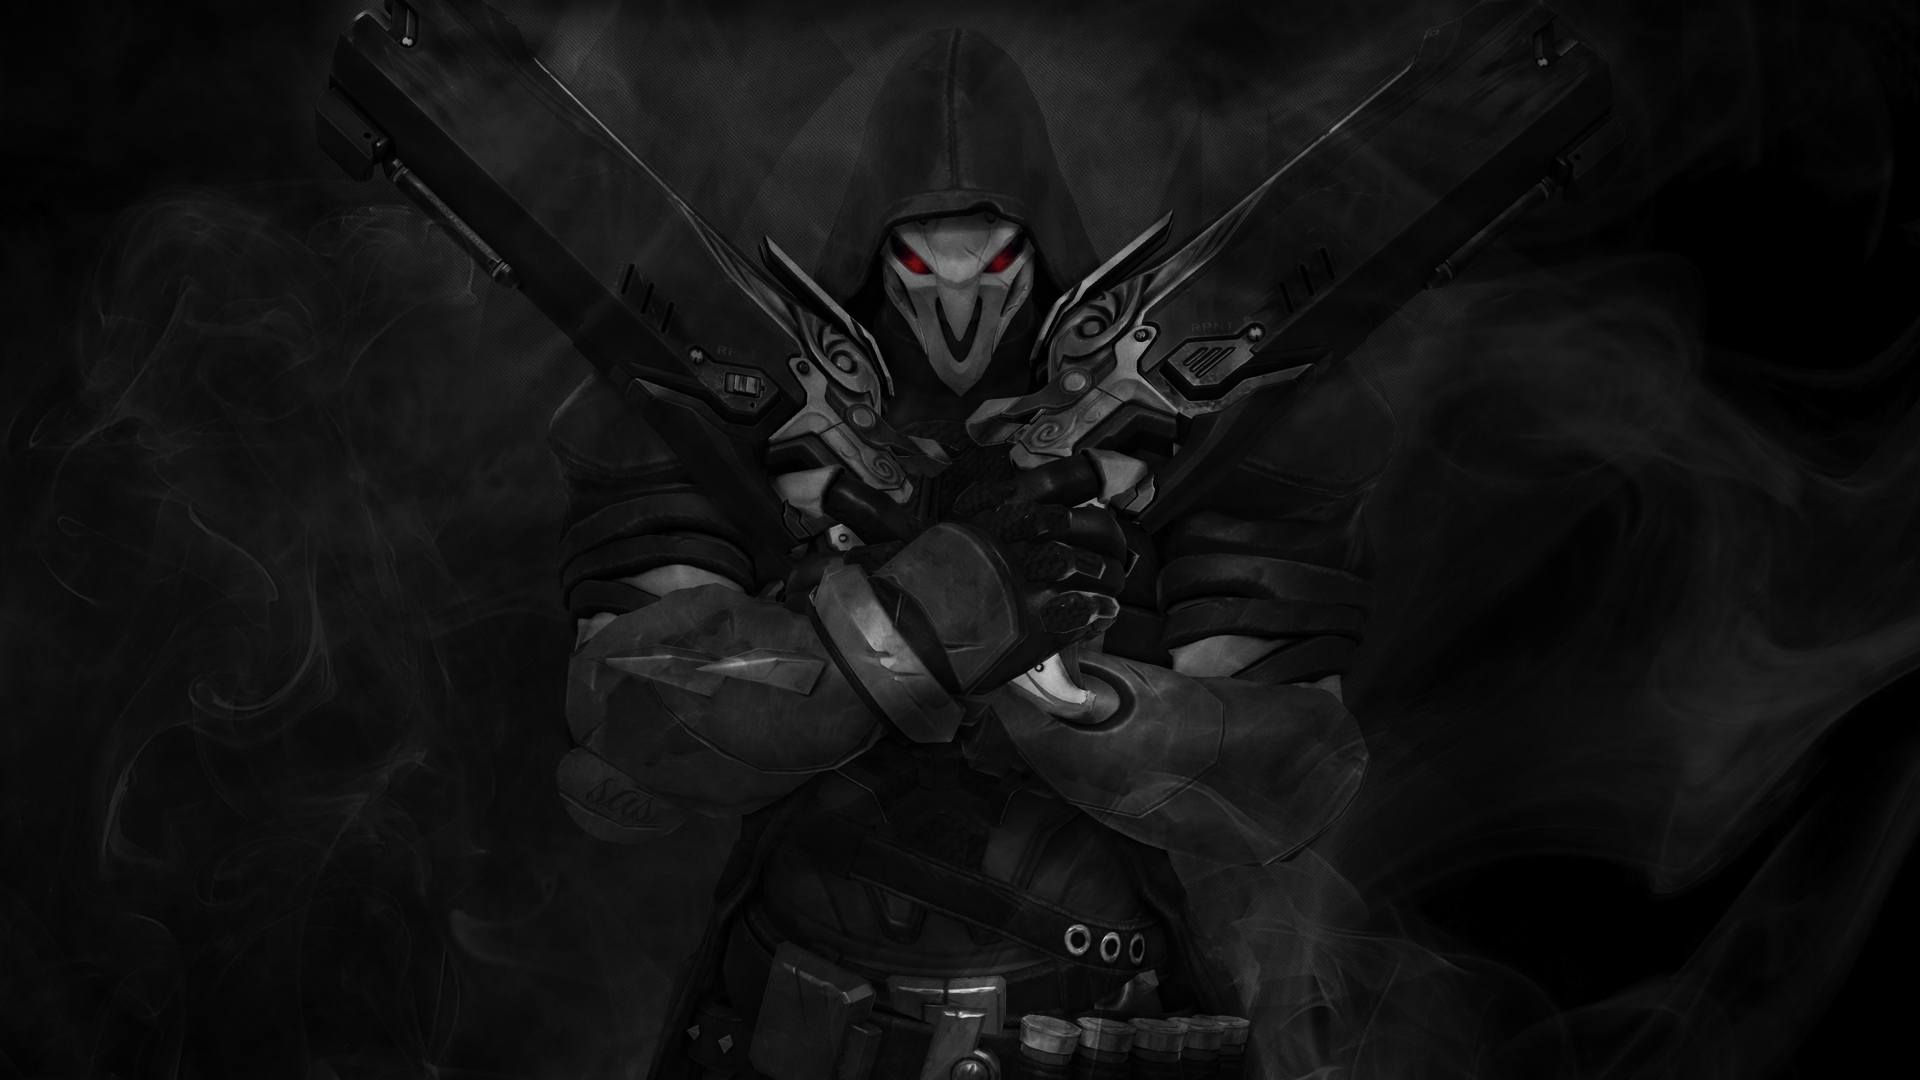 Reaper Overwatch Wallpaper Picture, Games Wallpaper